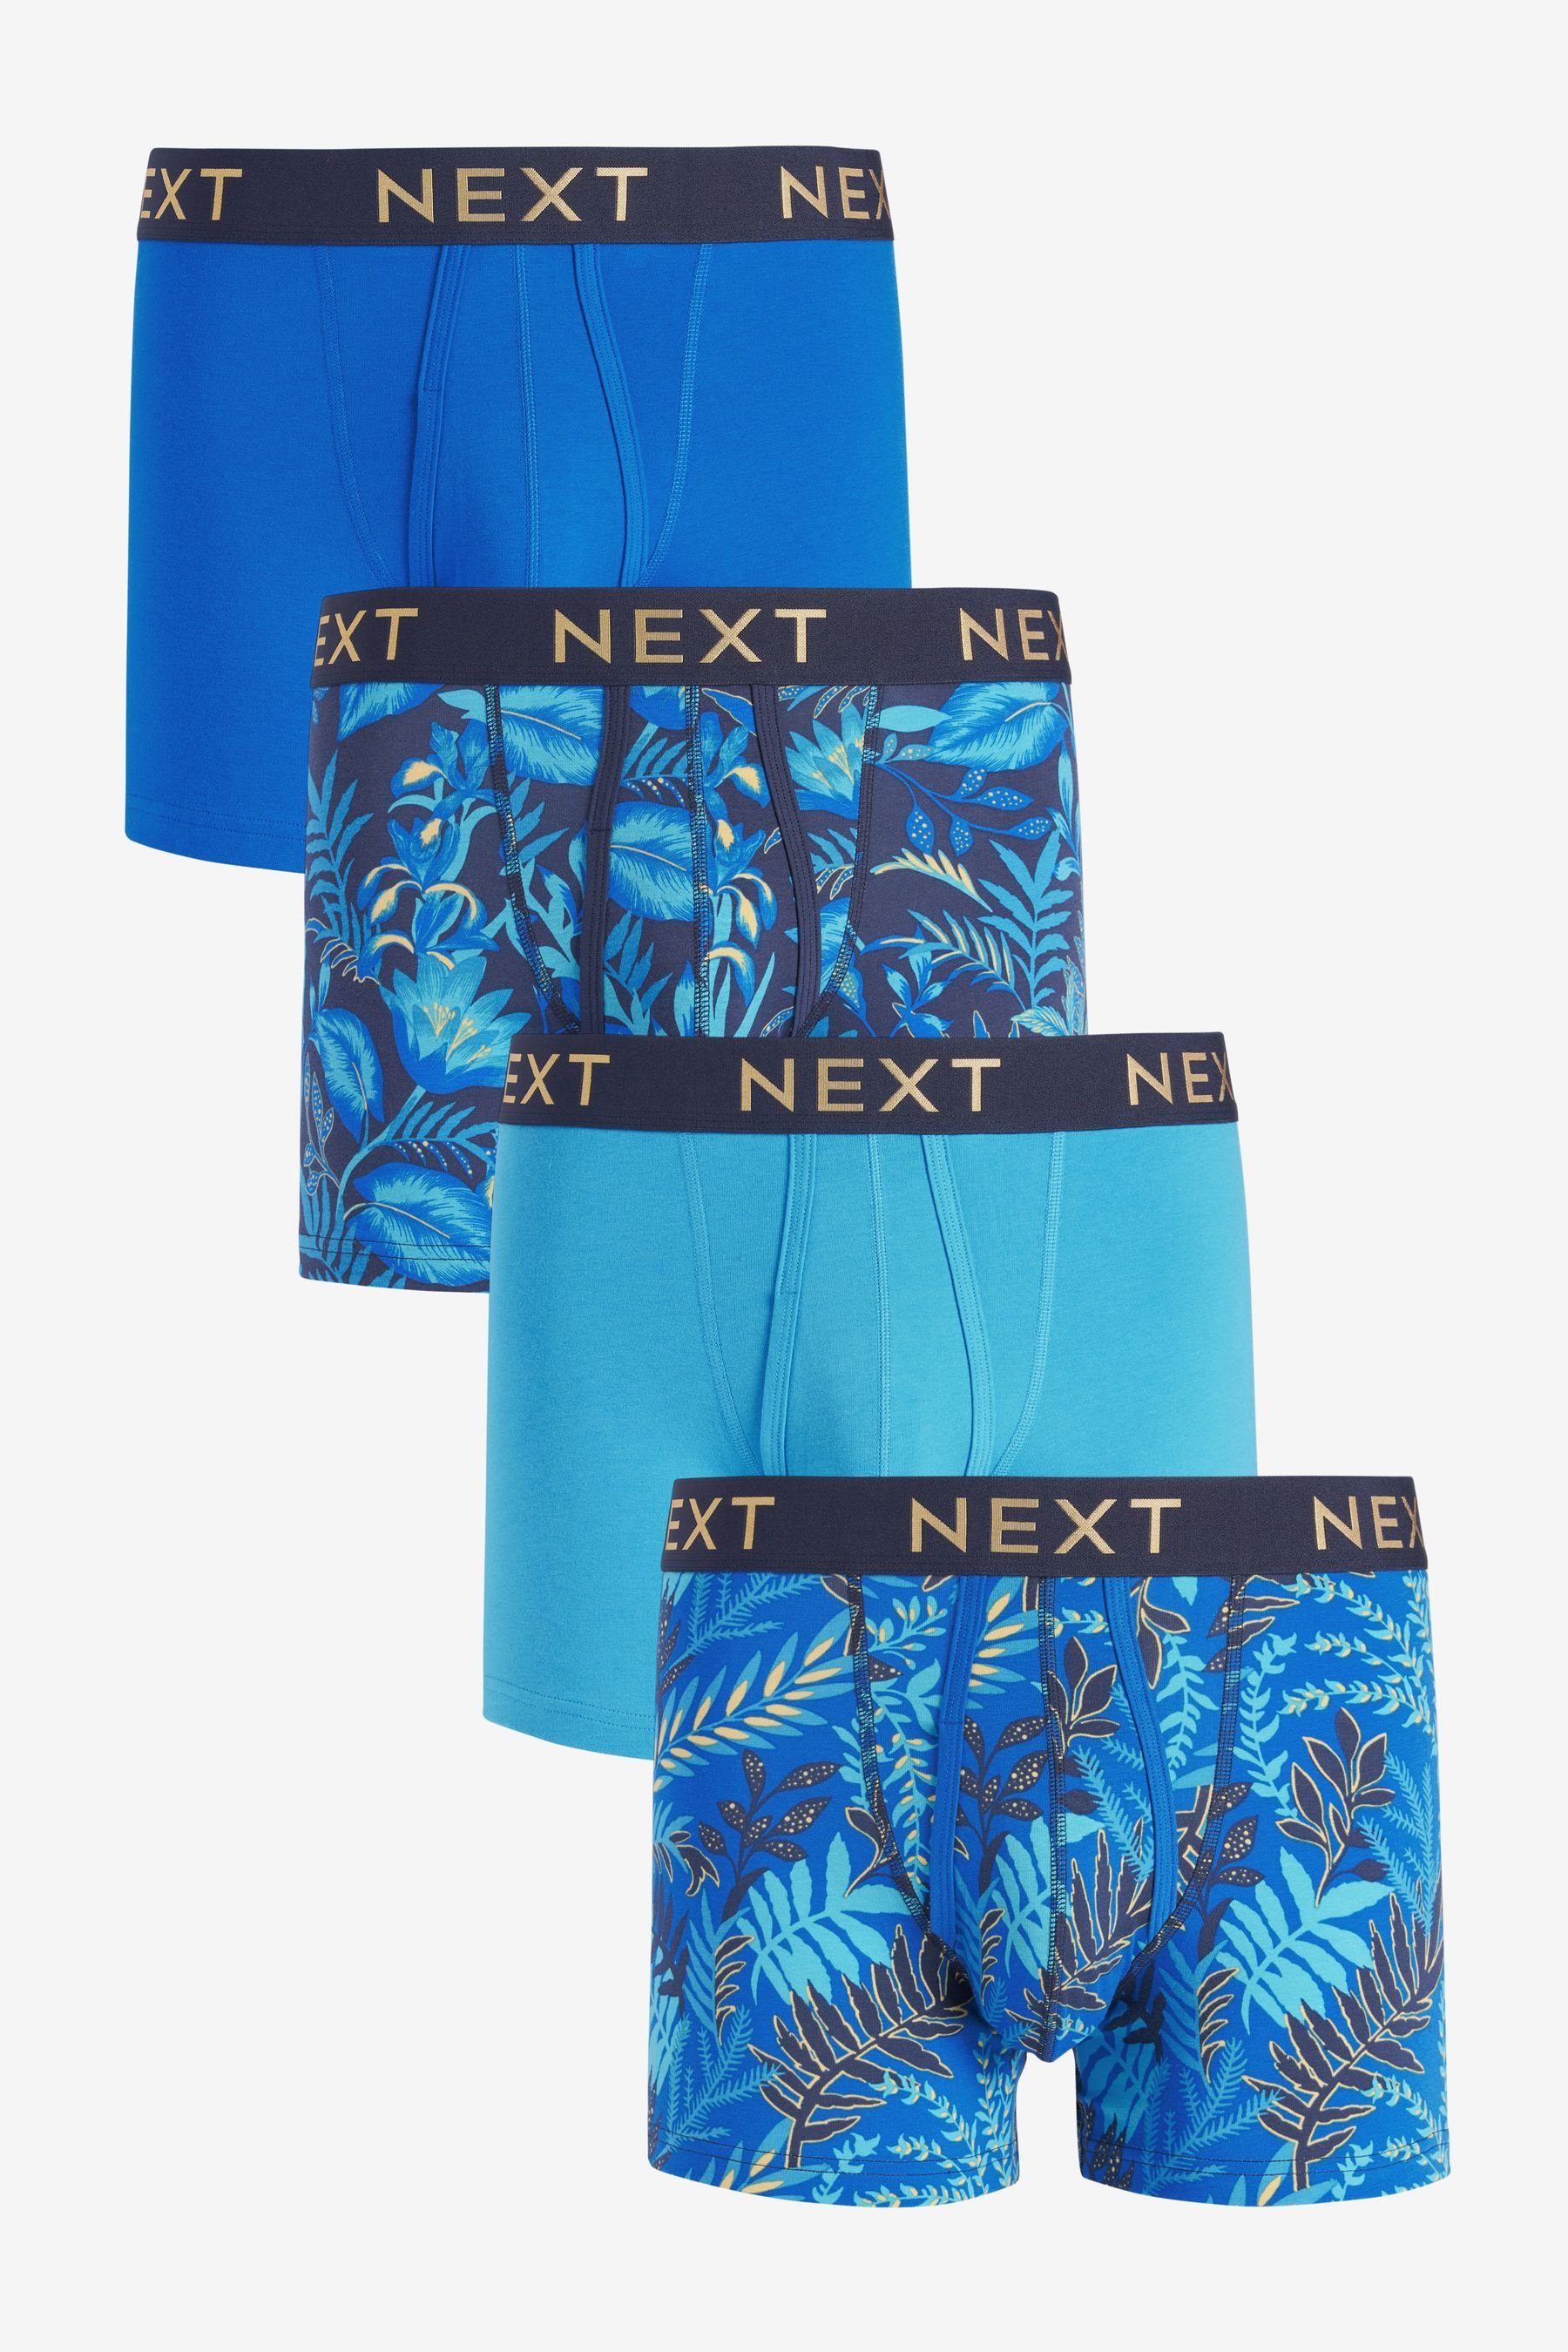 Next Boxershorts Gemusterte Boxershorts, Leaf (4-St) Print Blue 4er-Pack